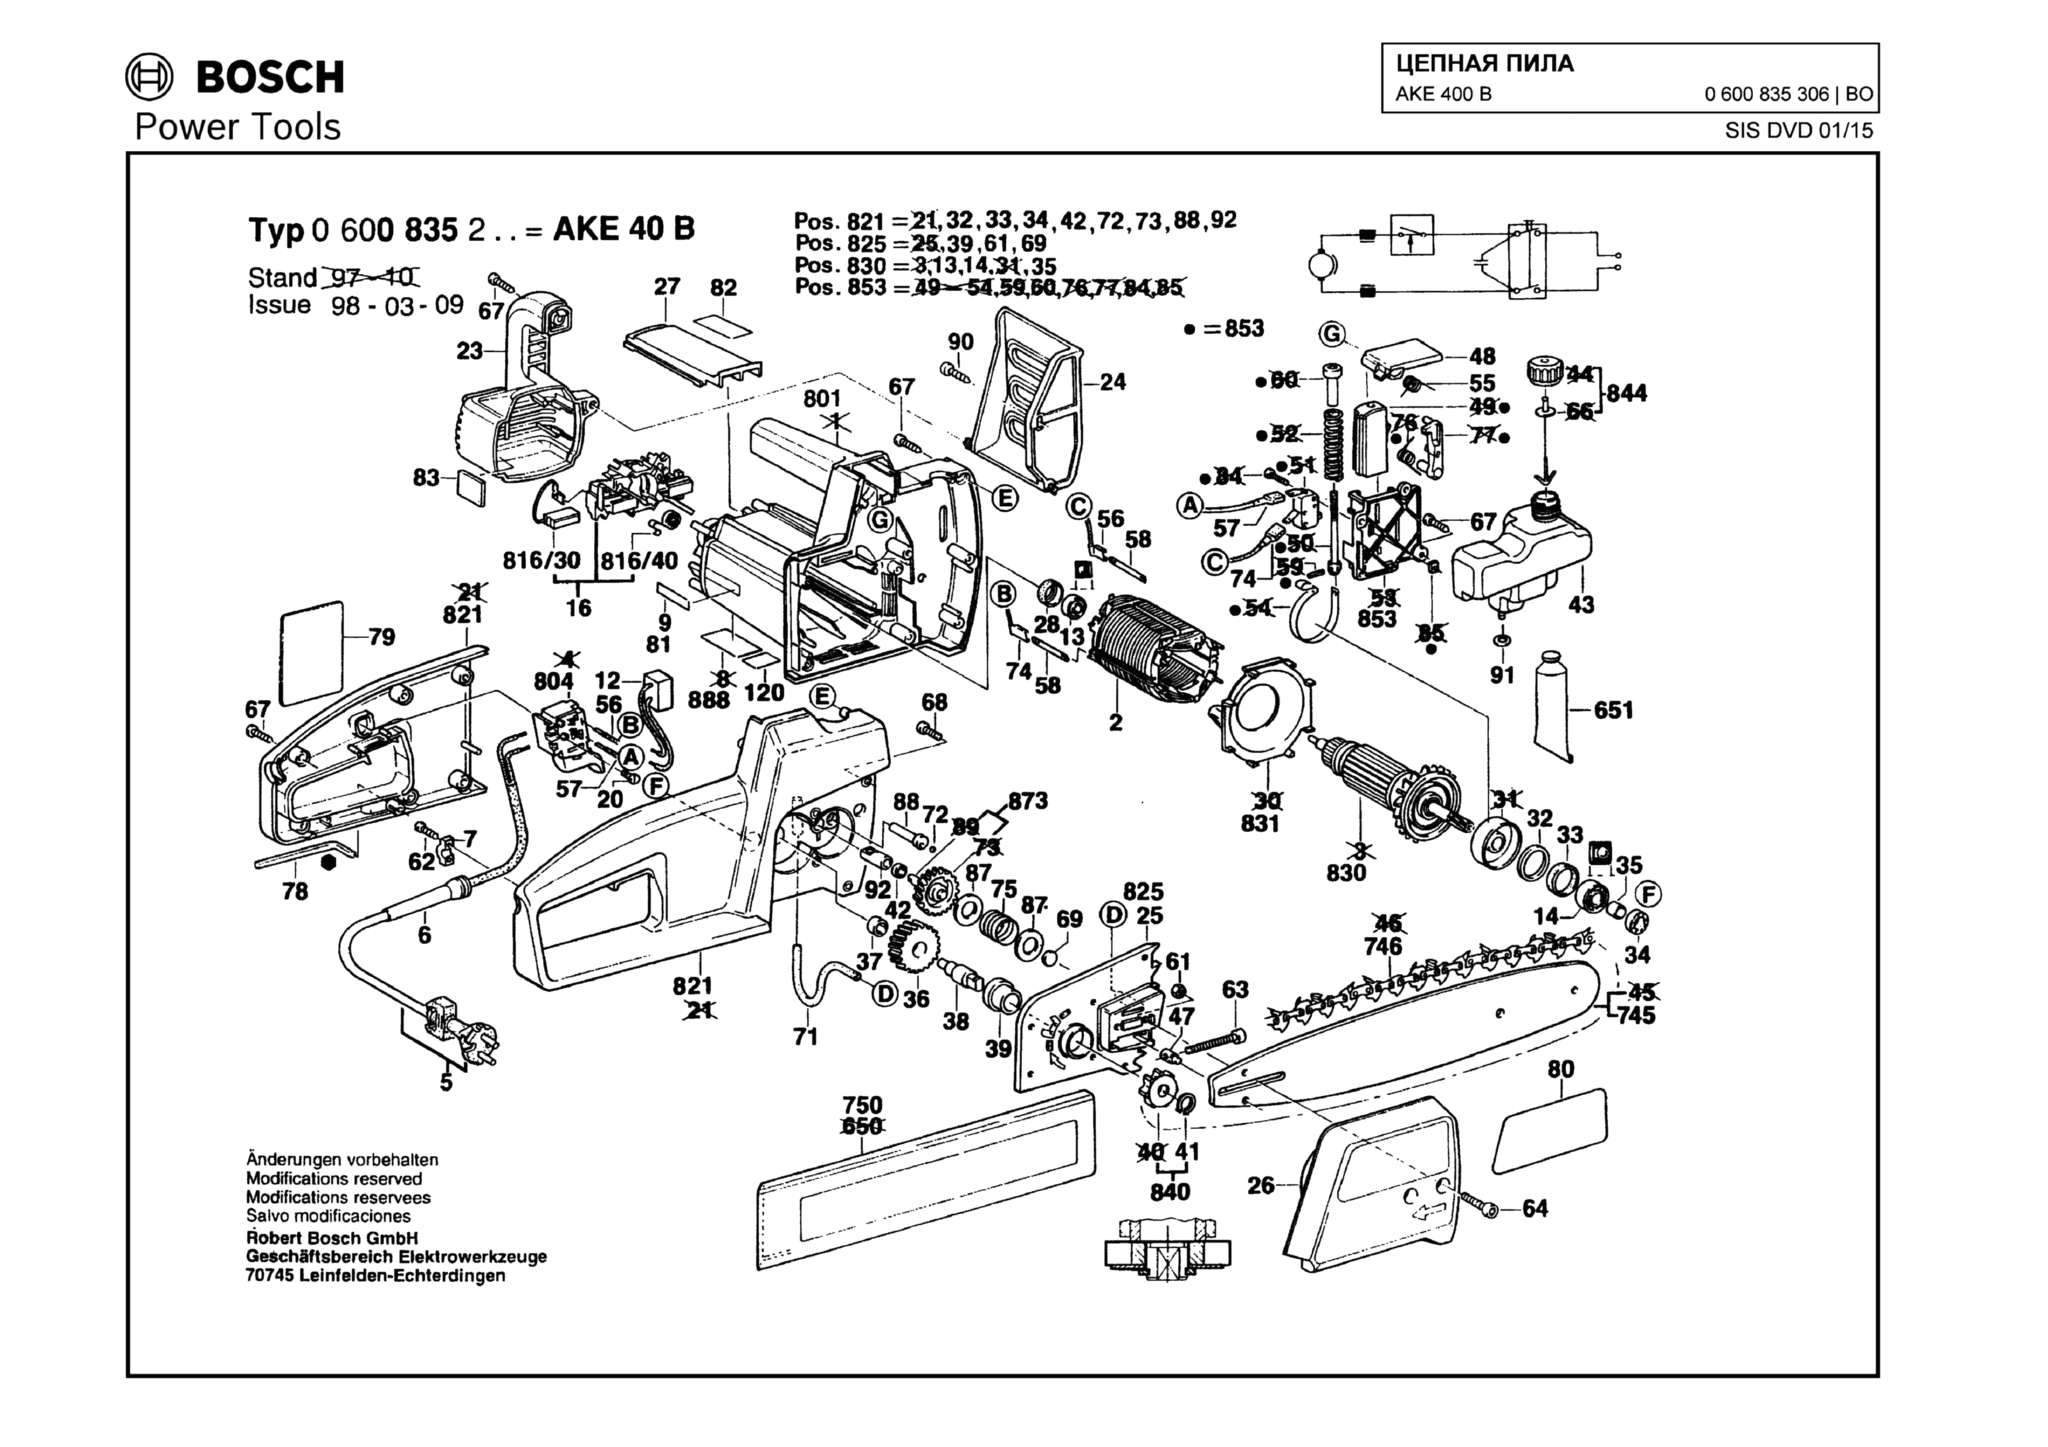 Запчасти, схема и деталировка Bosch AKE 400 B (ТИП 0600835306)